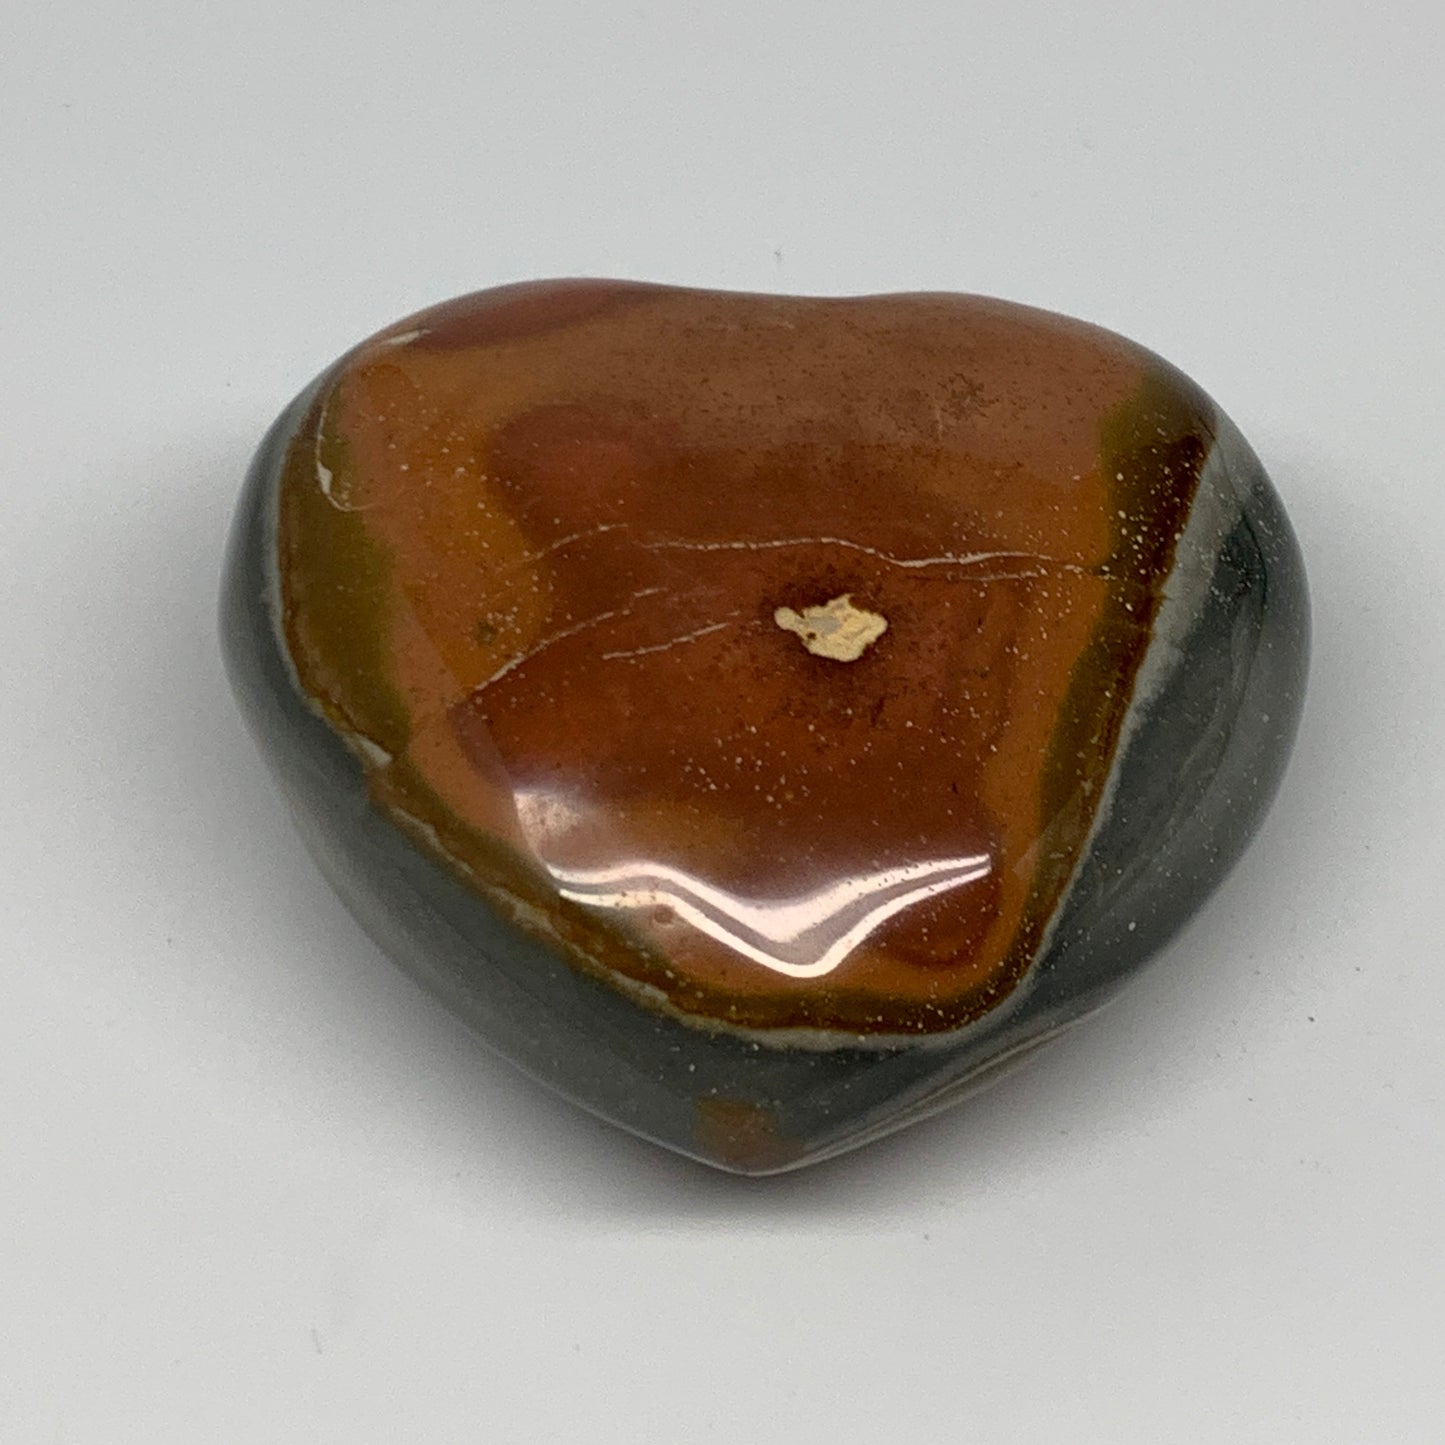 483.1g, 3.4"x3.7"x1.8" Polychrome Jasper Heart Polished Healing Crystal, B17435